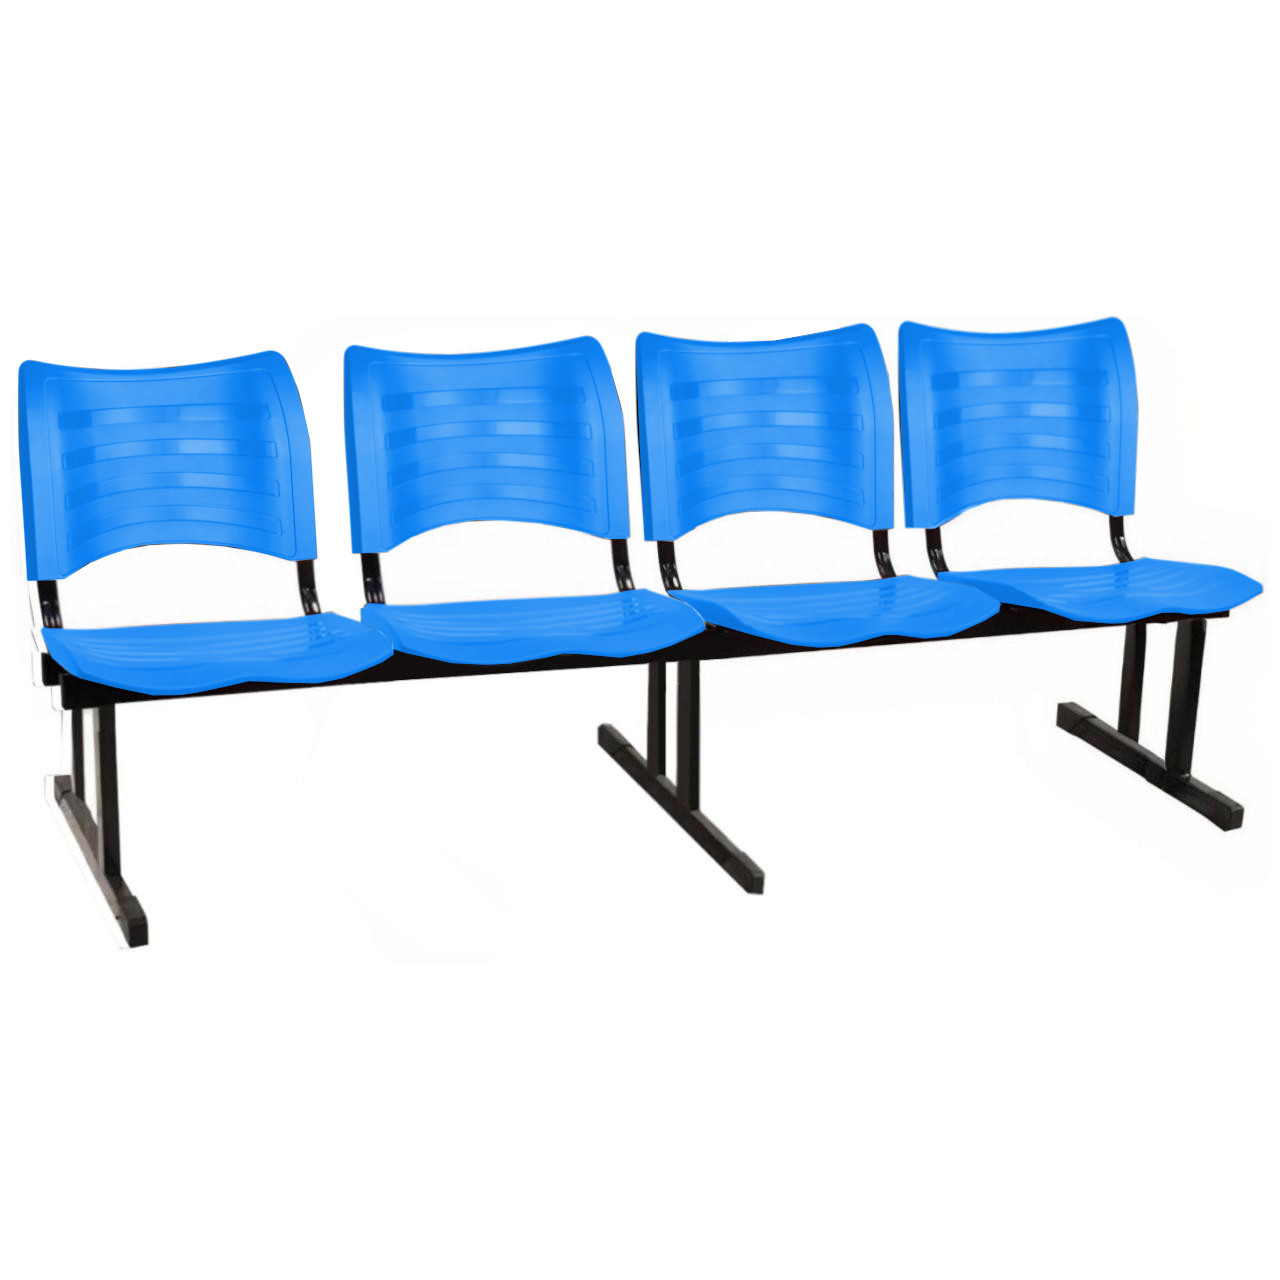 Cadeira Longarina PLÁSTICA 04 Lugares – Cor Azul – MRPLAST – 34198 KAIRÓS OFFICE Longarinas